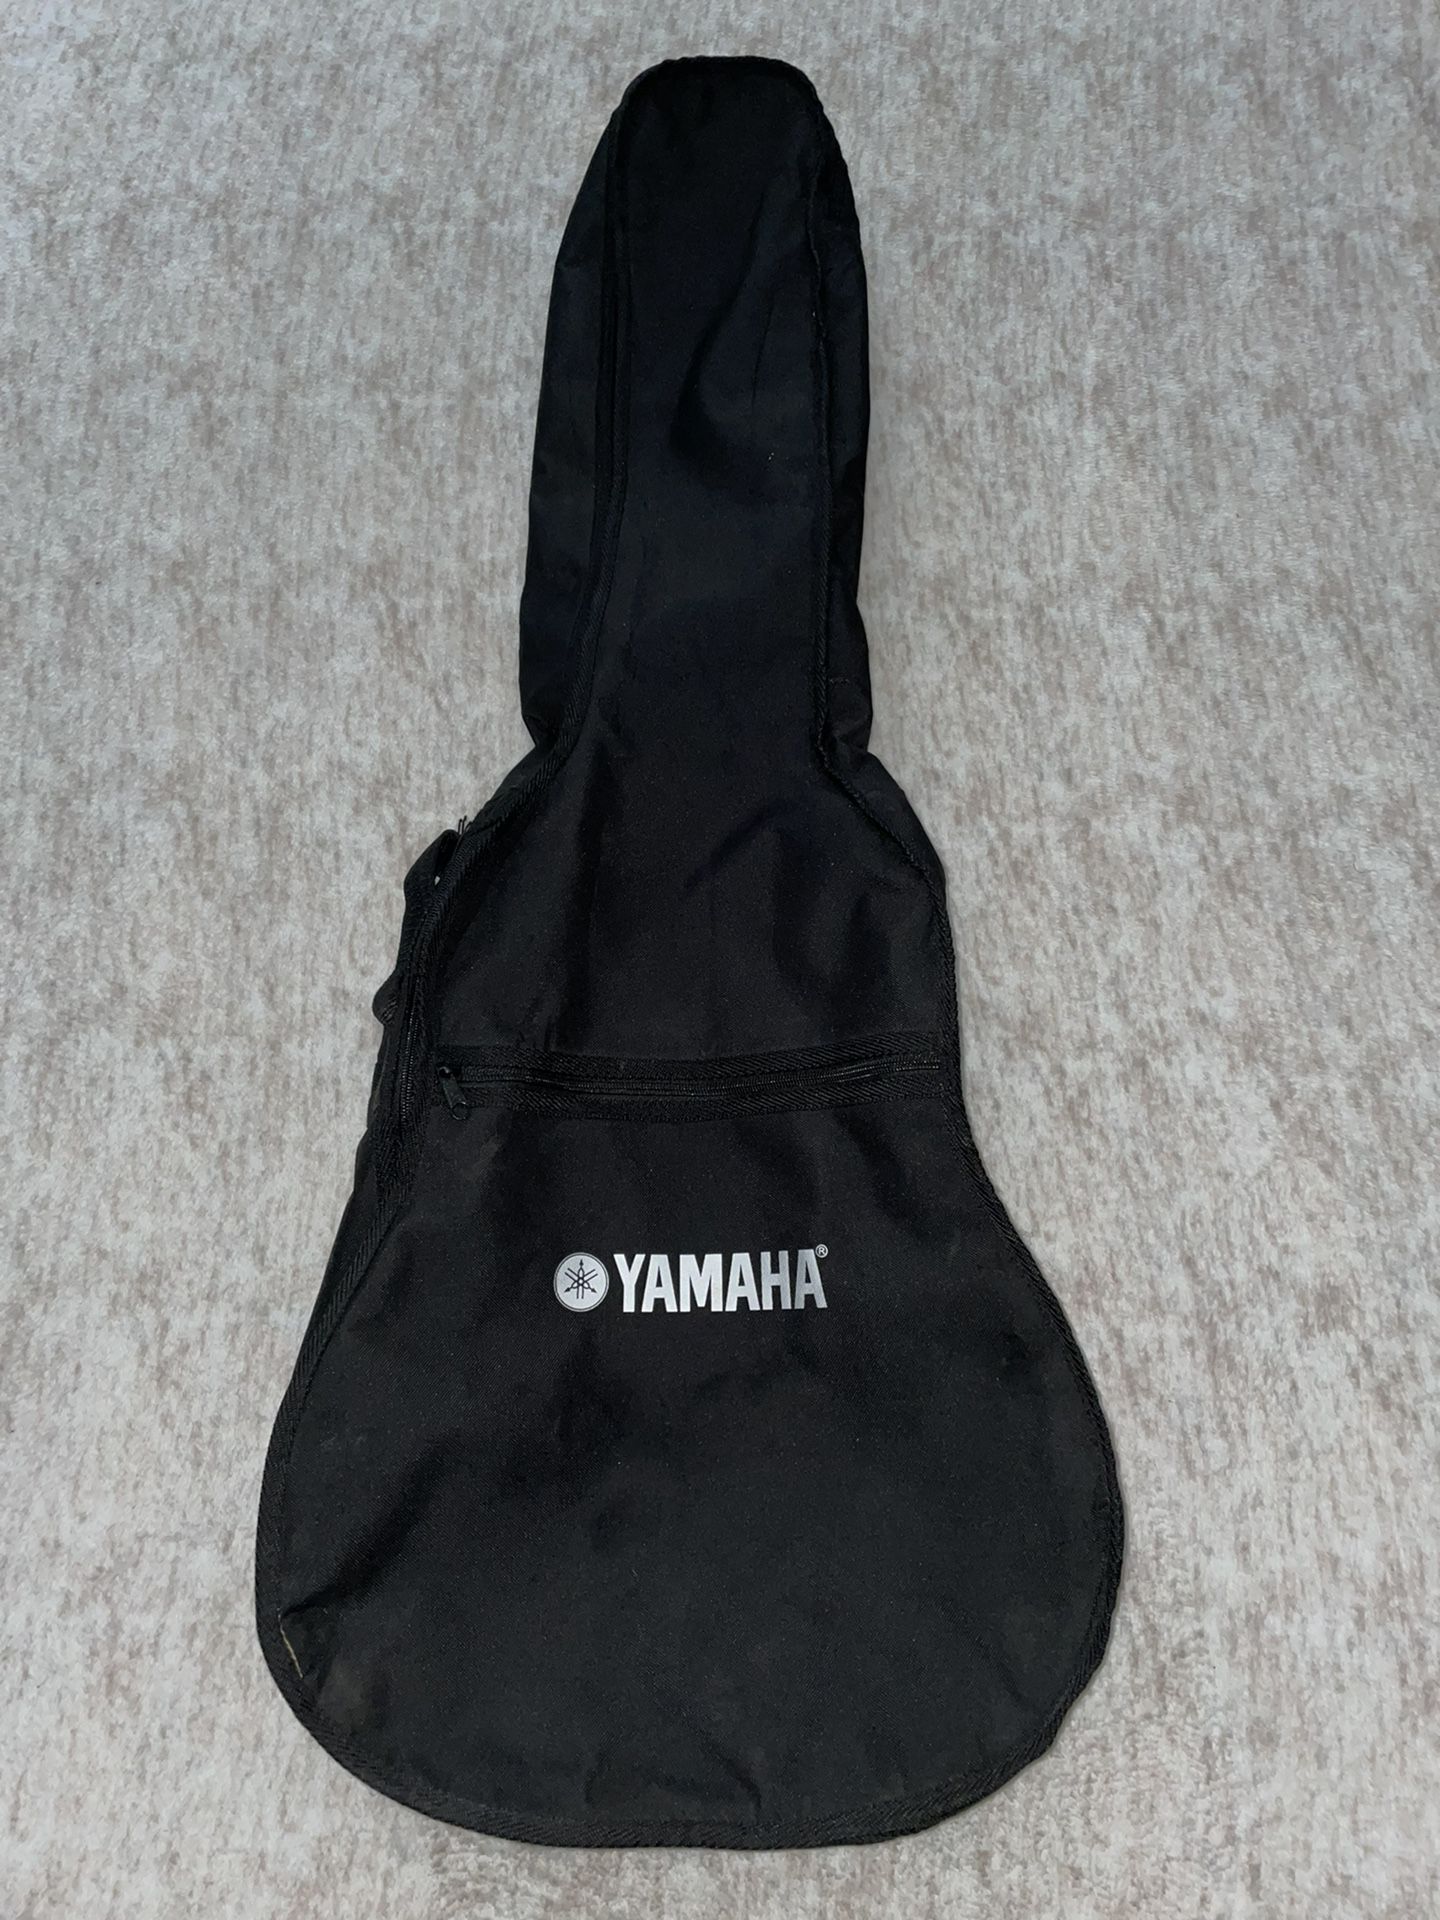 Yamaha Guitar Case